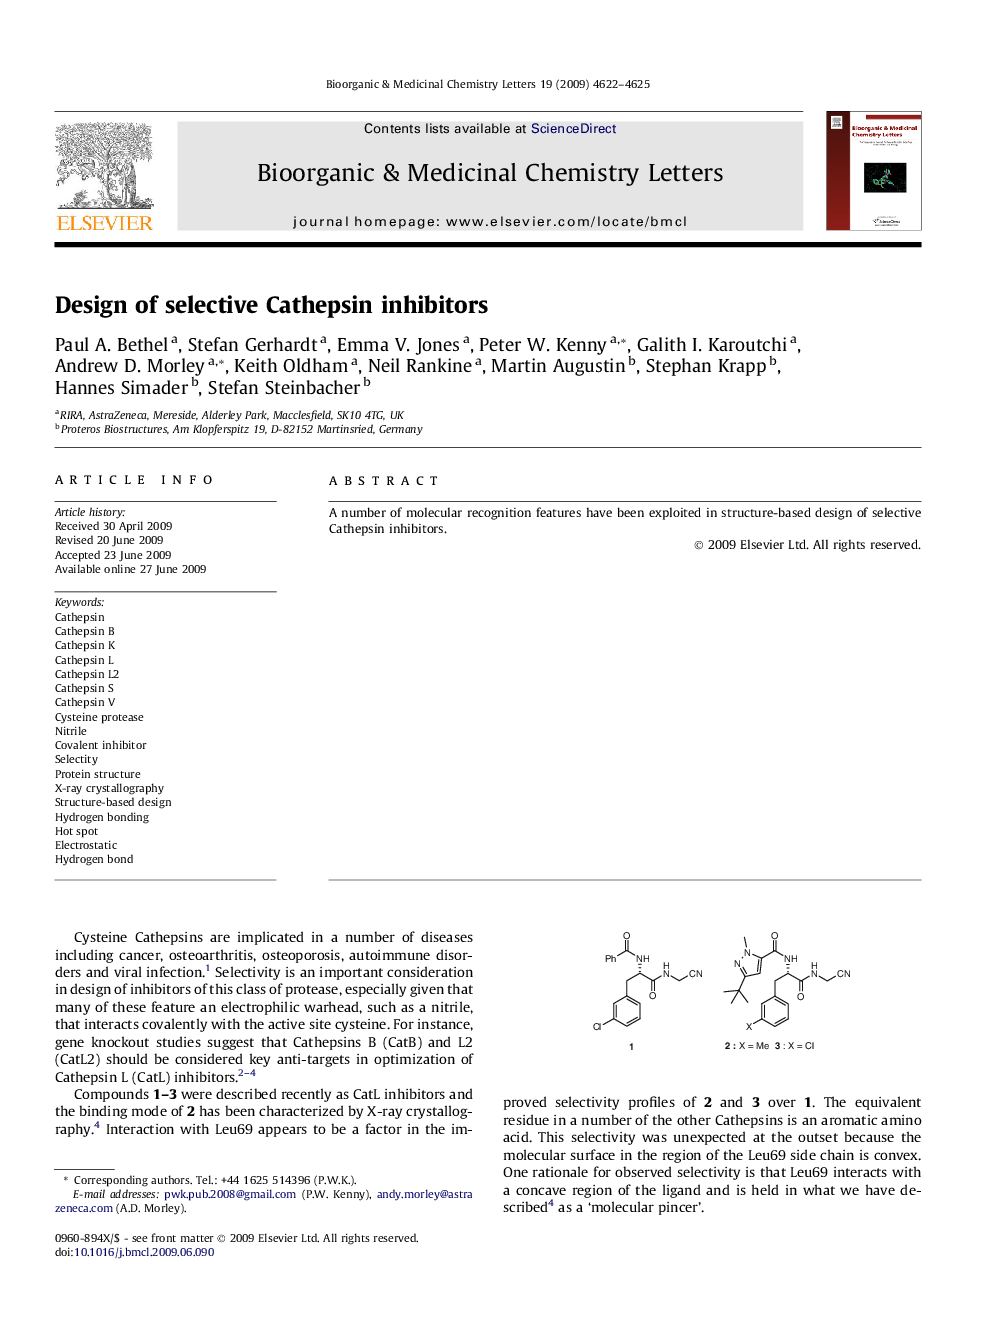 Design of selective Cathepsin inhibitors